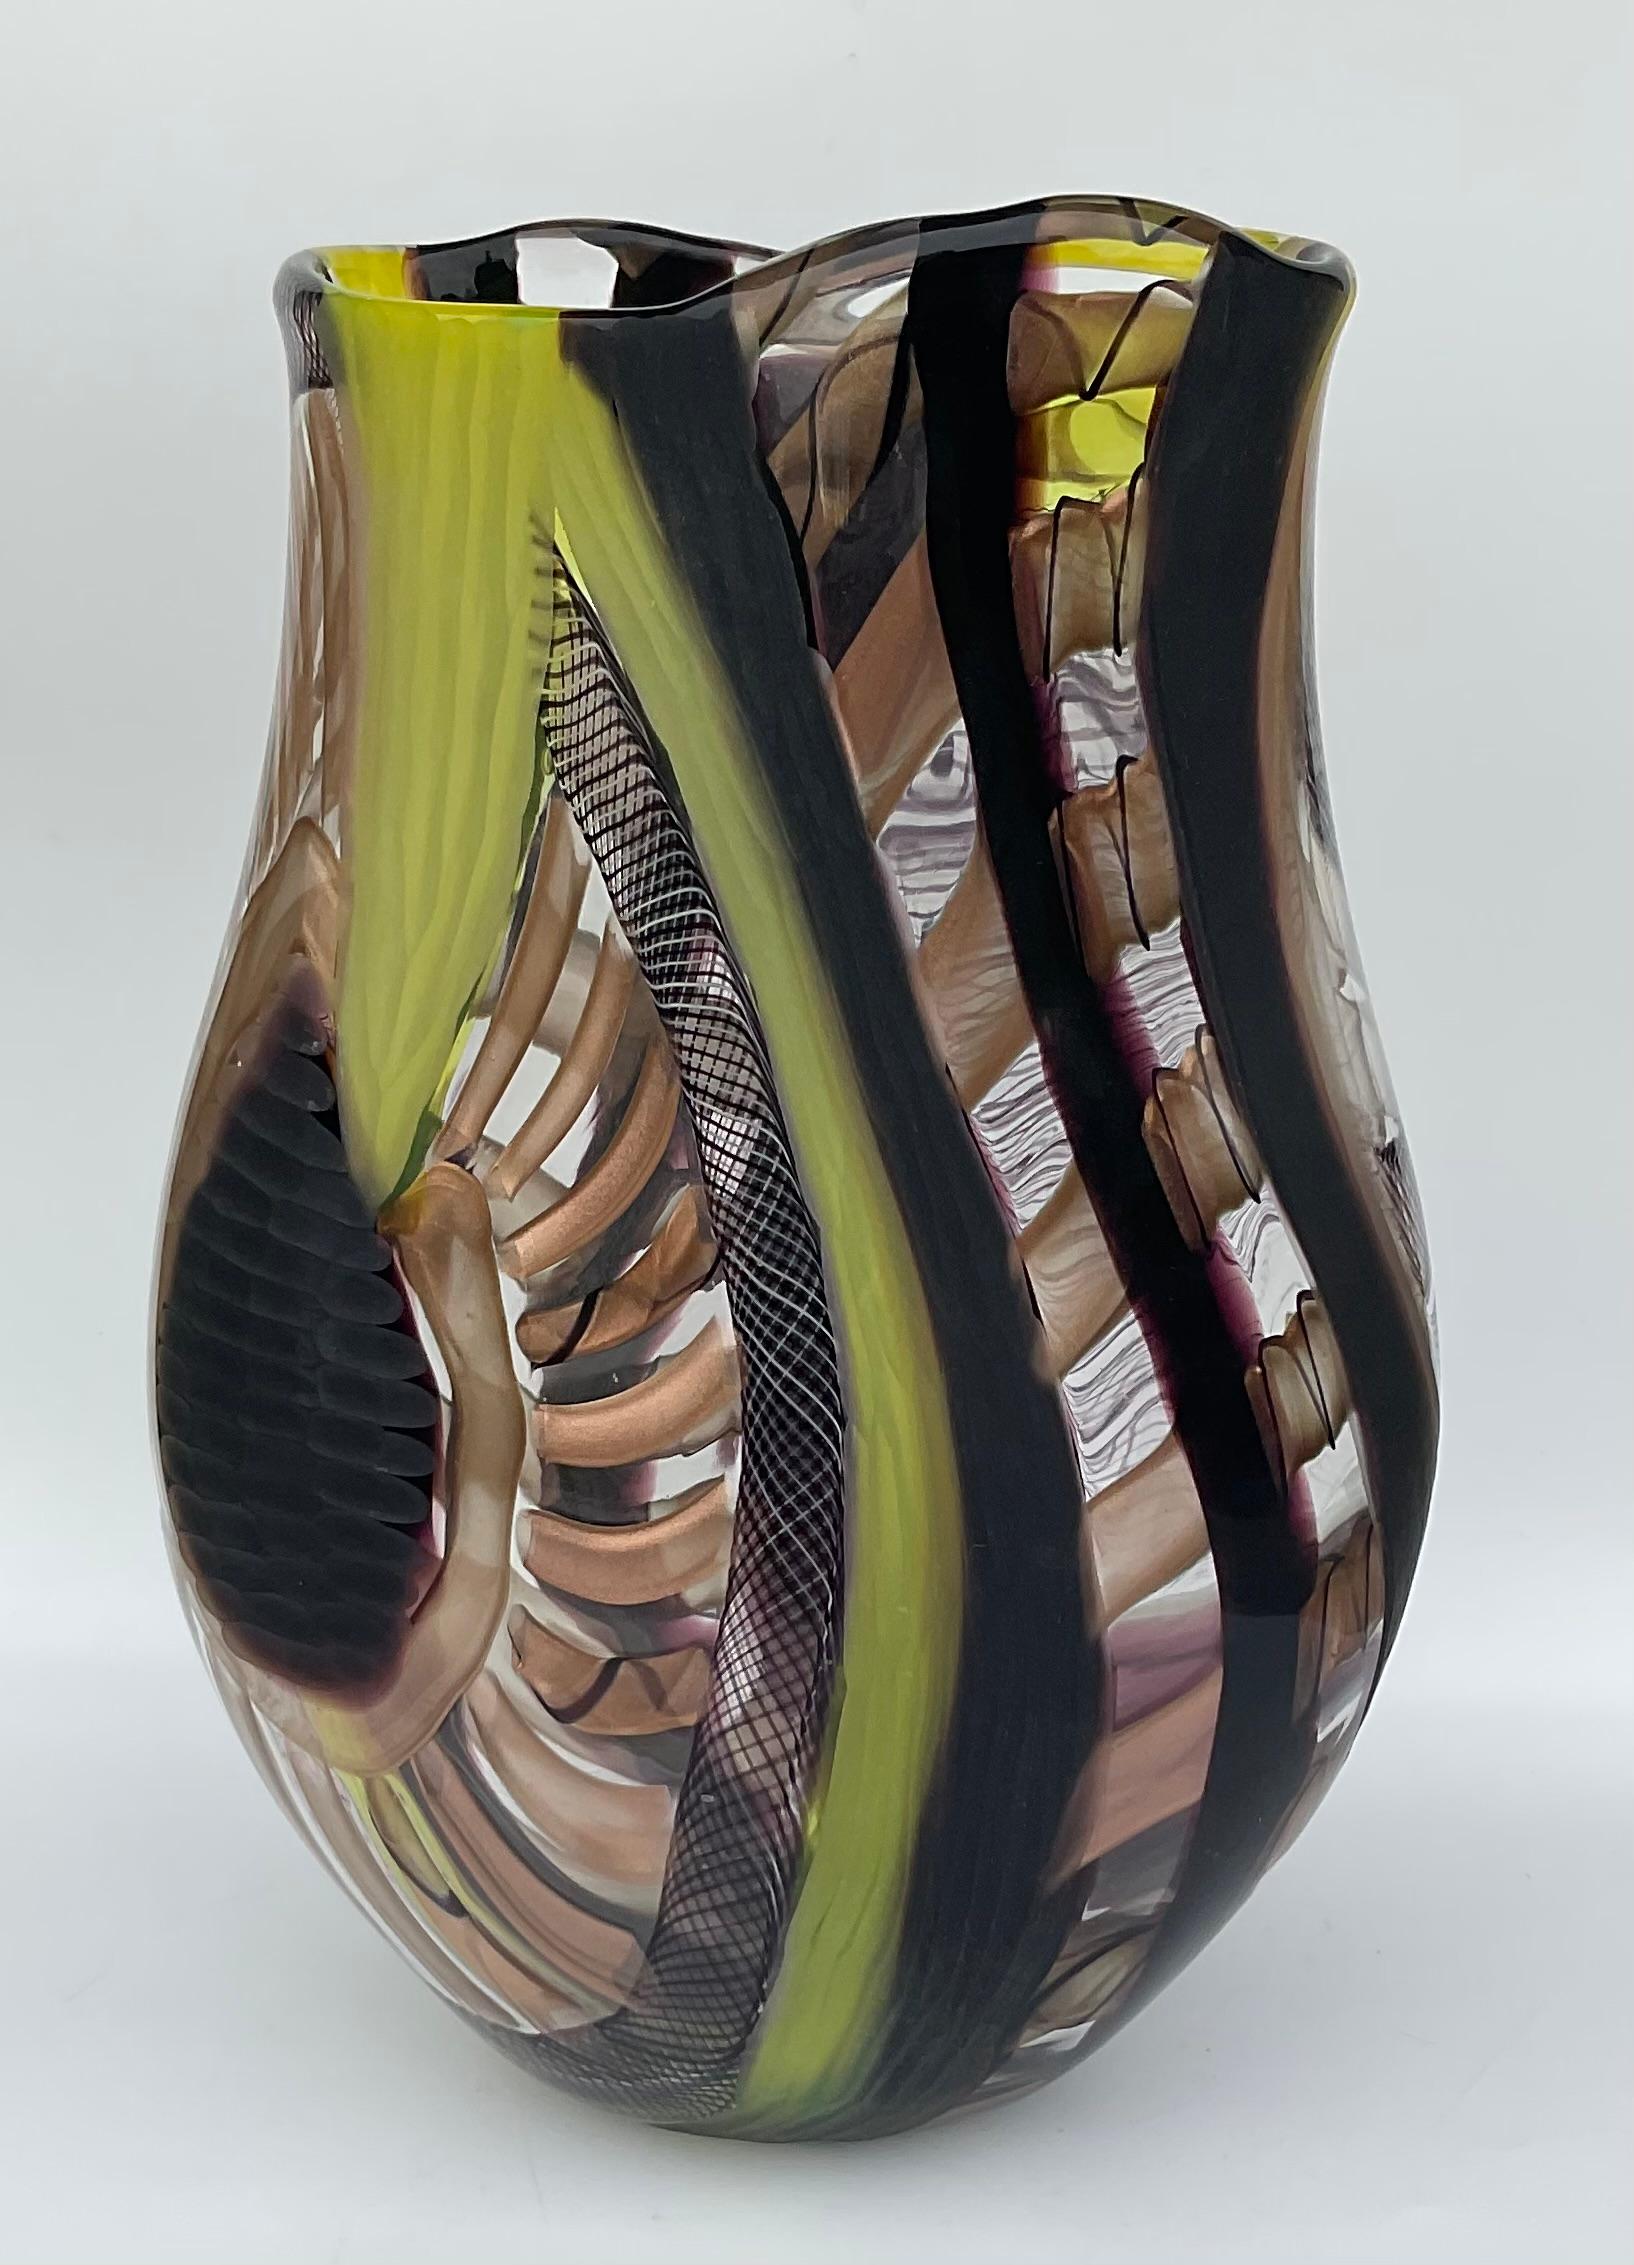 Mid-Century Modern Signoretti Murano Art Glass Vase with Pinwheels and Battuto Work Signed 1 of 1